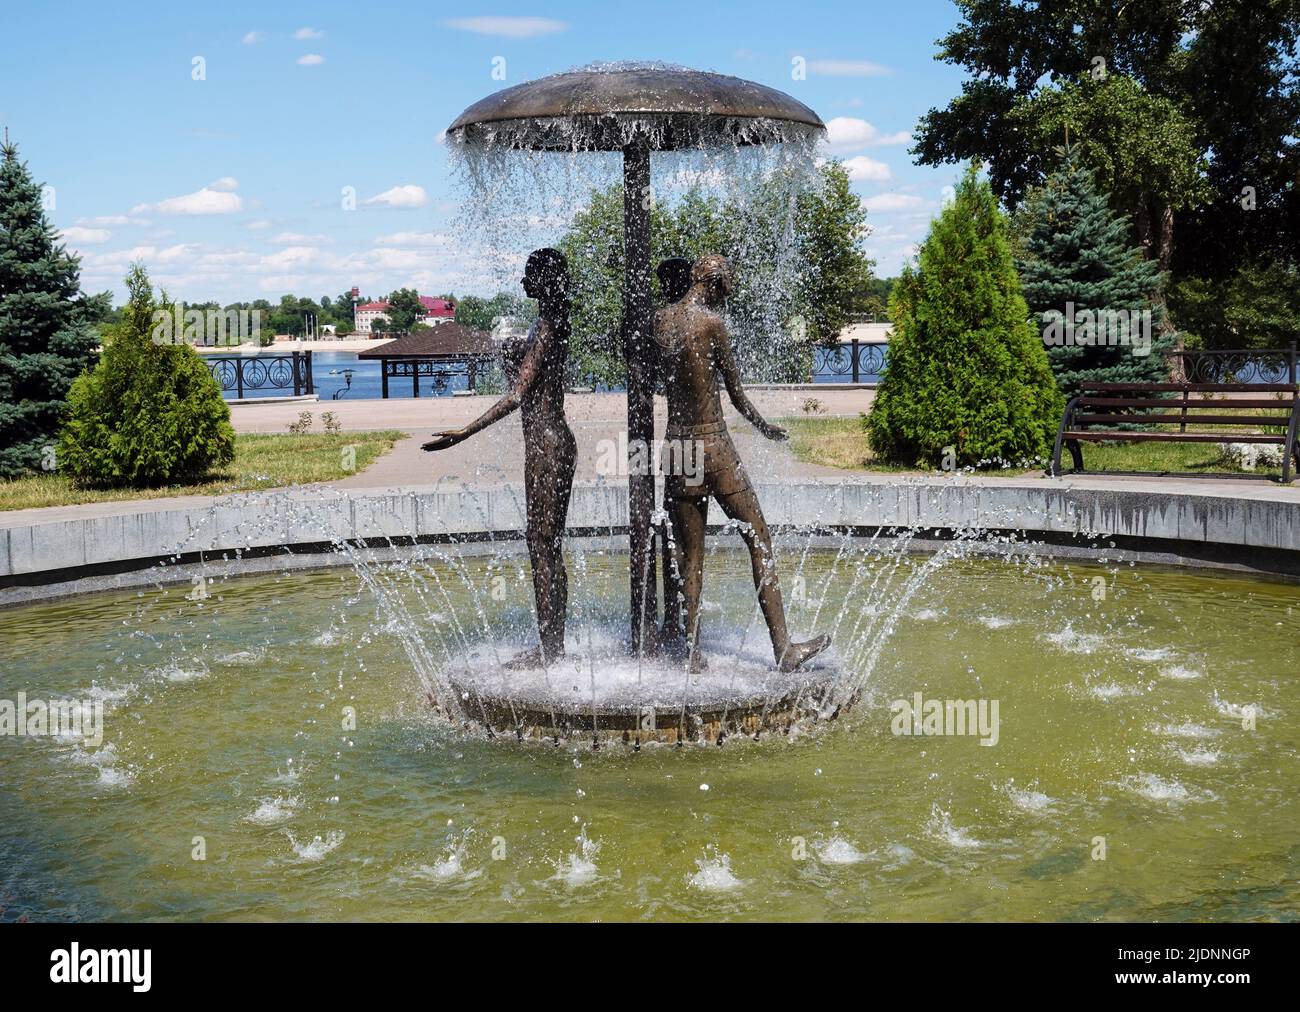 Kiev, Ukraine July 20, 2020: Sculpture - fountain of a girl under an umbrella in the park Stock Photo